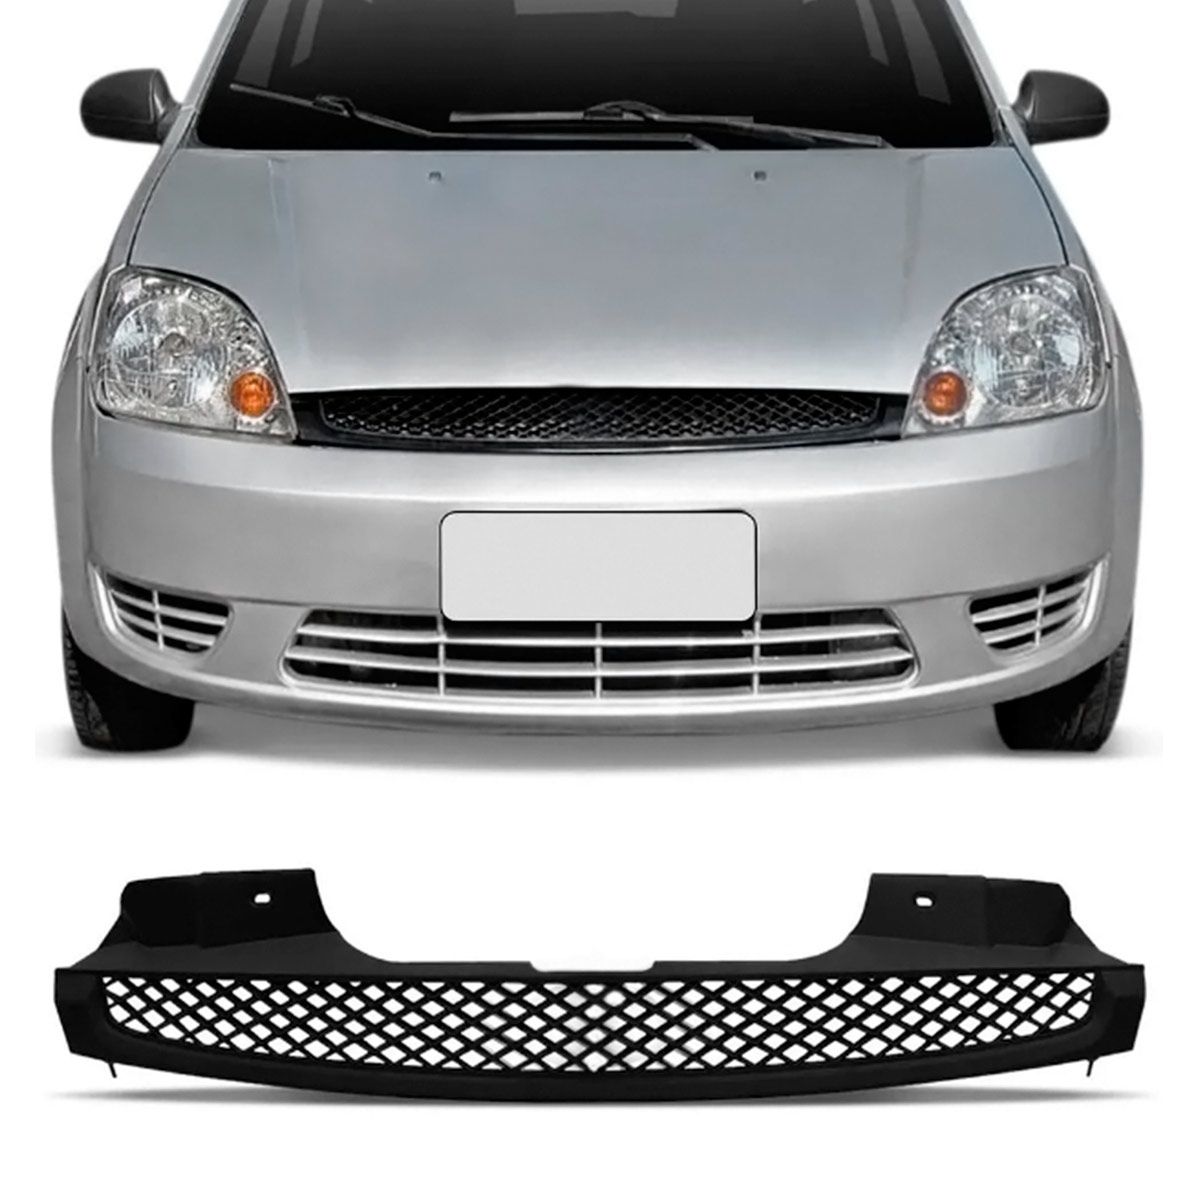 Grade Dianteira Ford Fiesta Hatch/Sedan 2002 à 2007 Sem Emblema